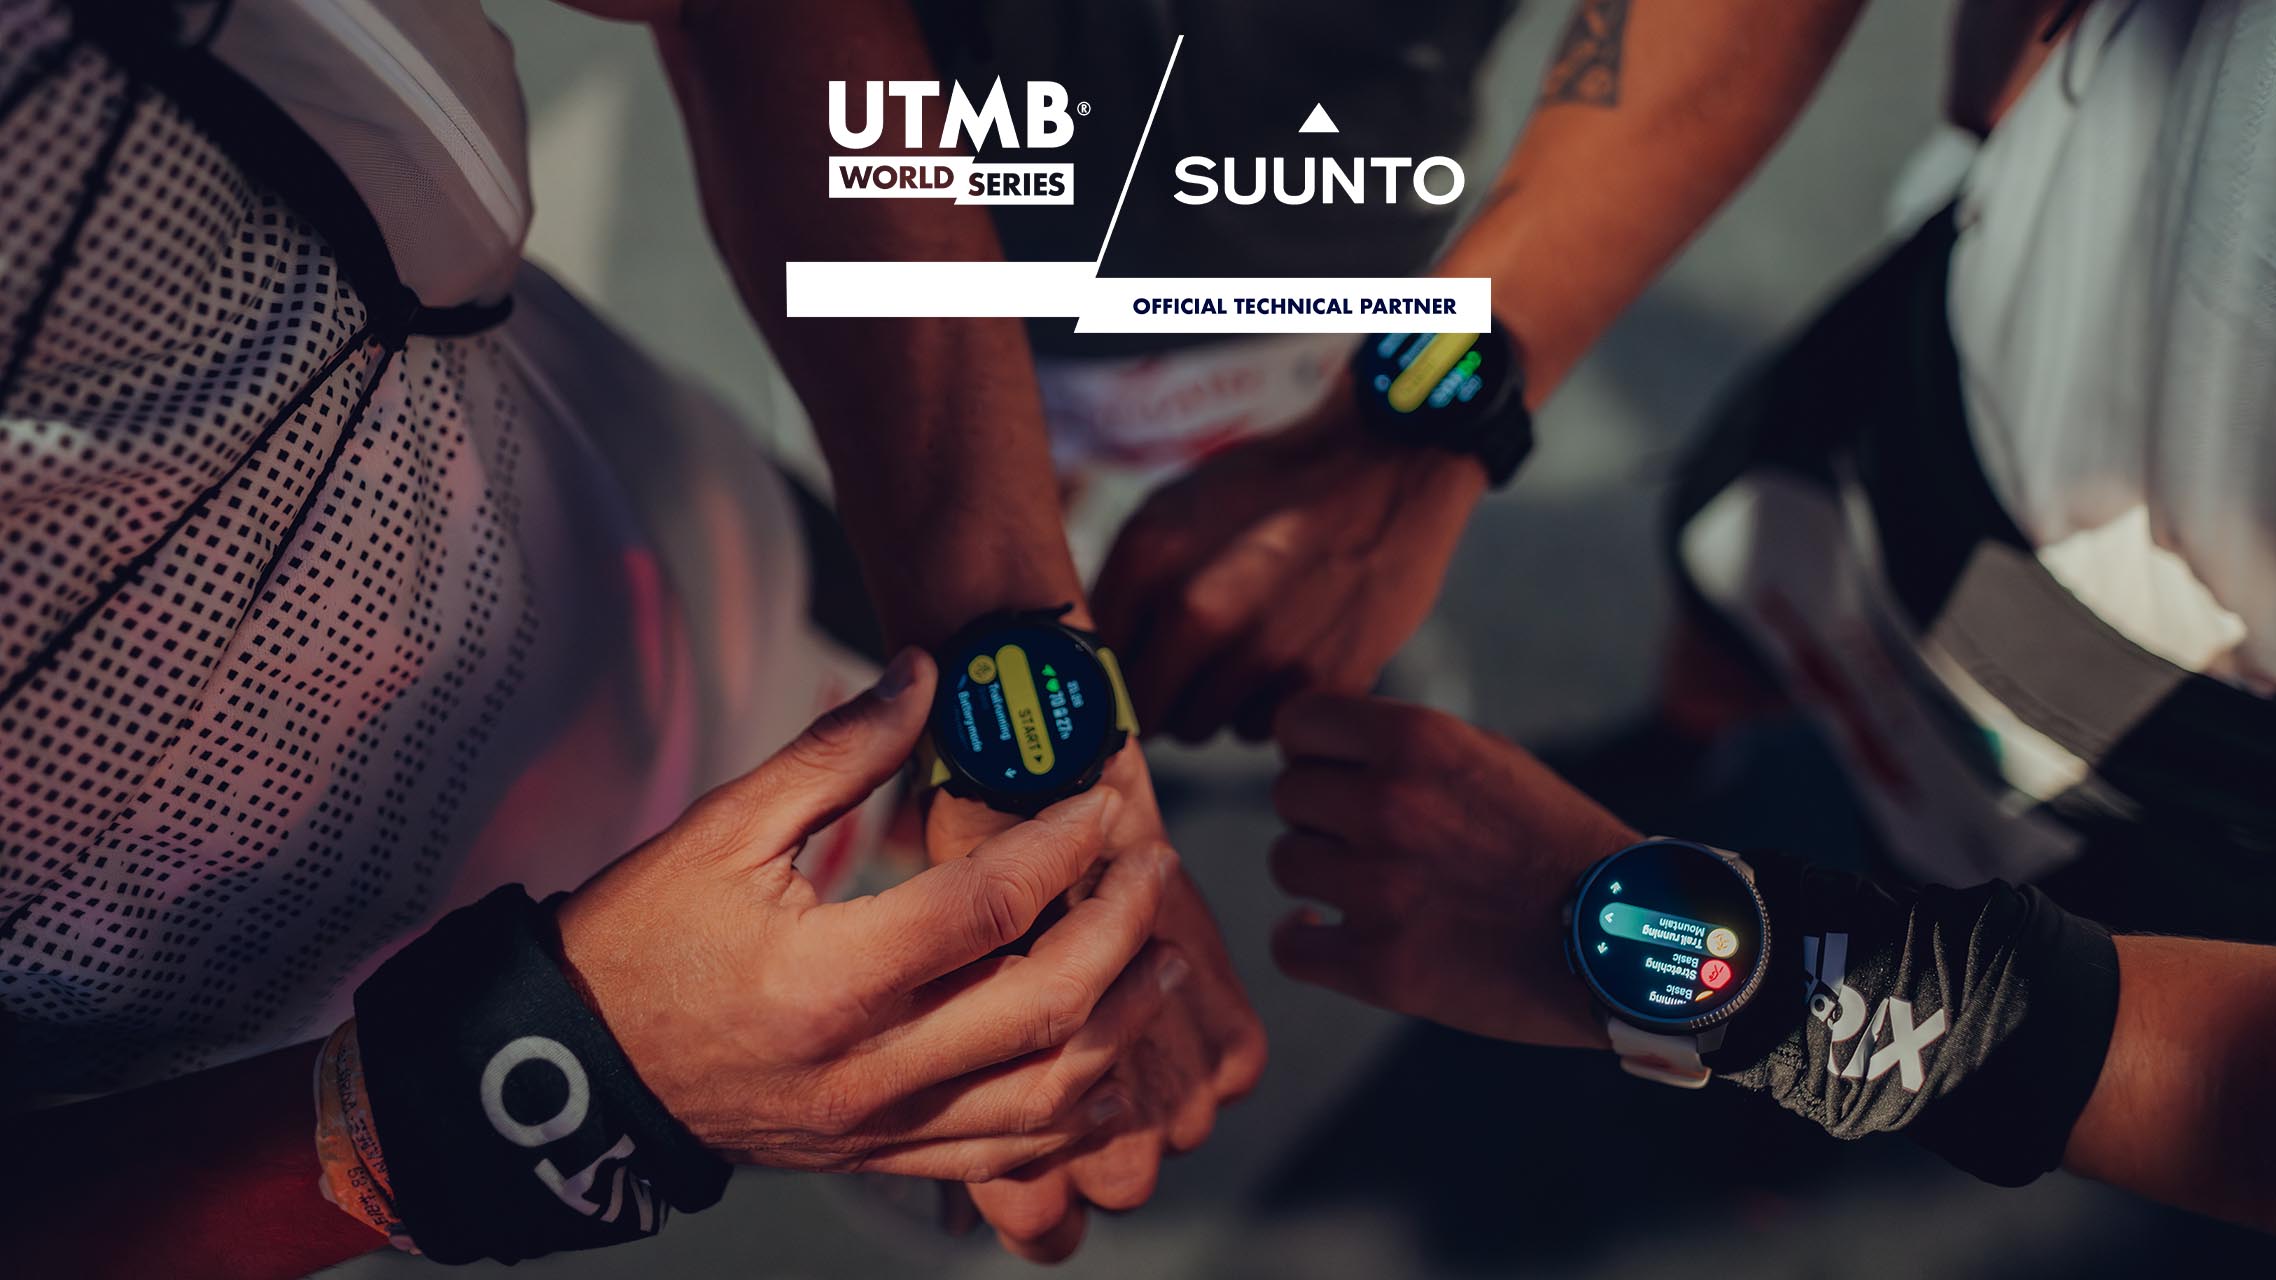 Suuntoのスポーツウォッチ、ダイビング製品、コンパスおよびアクセサリー